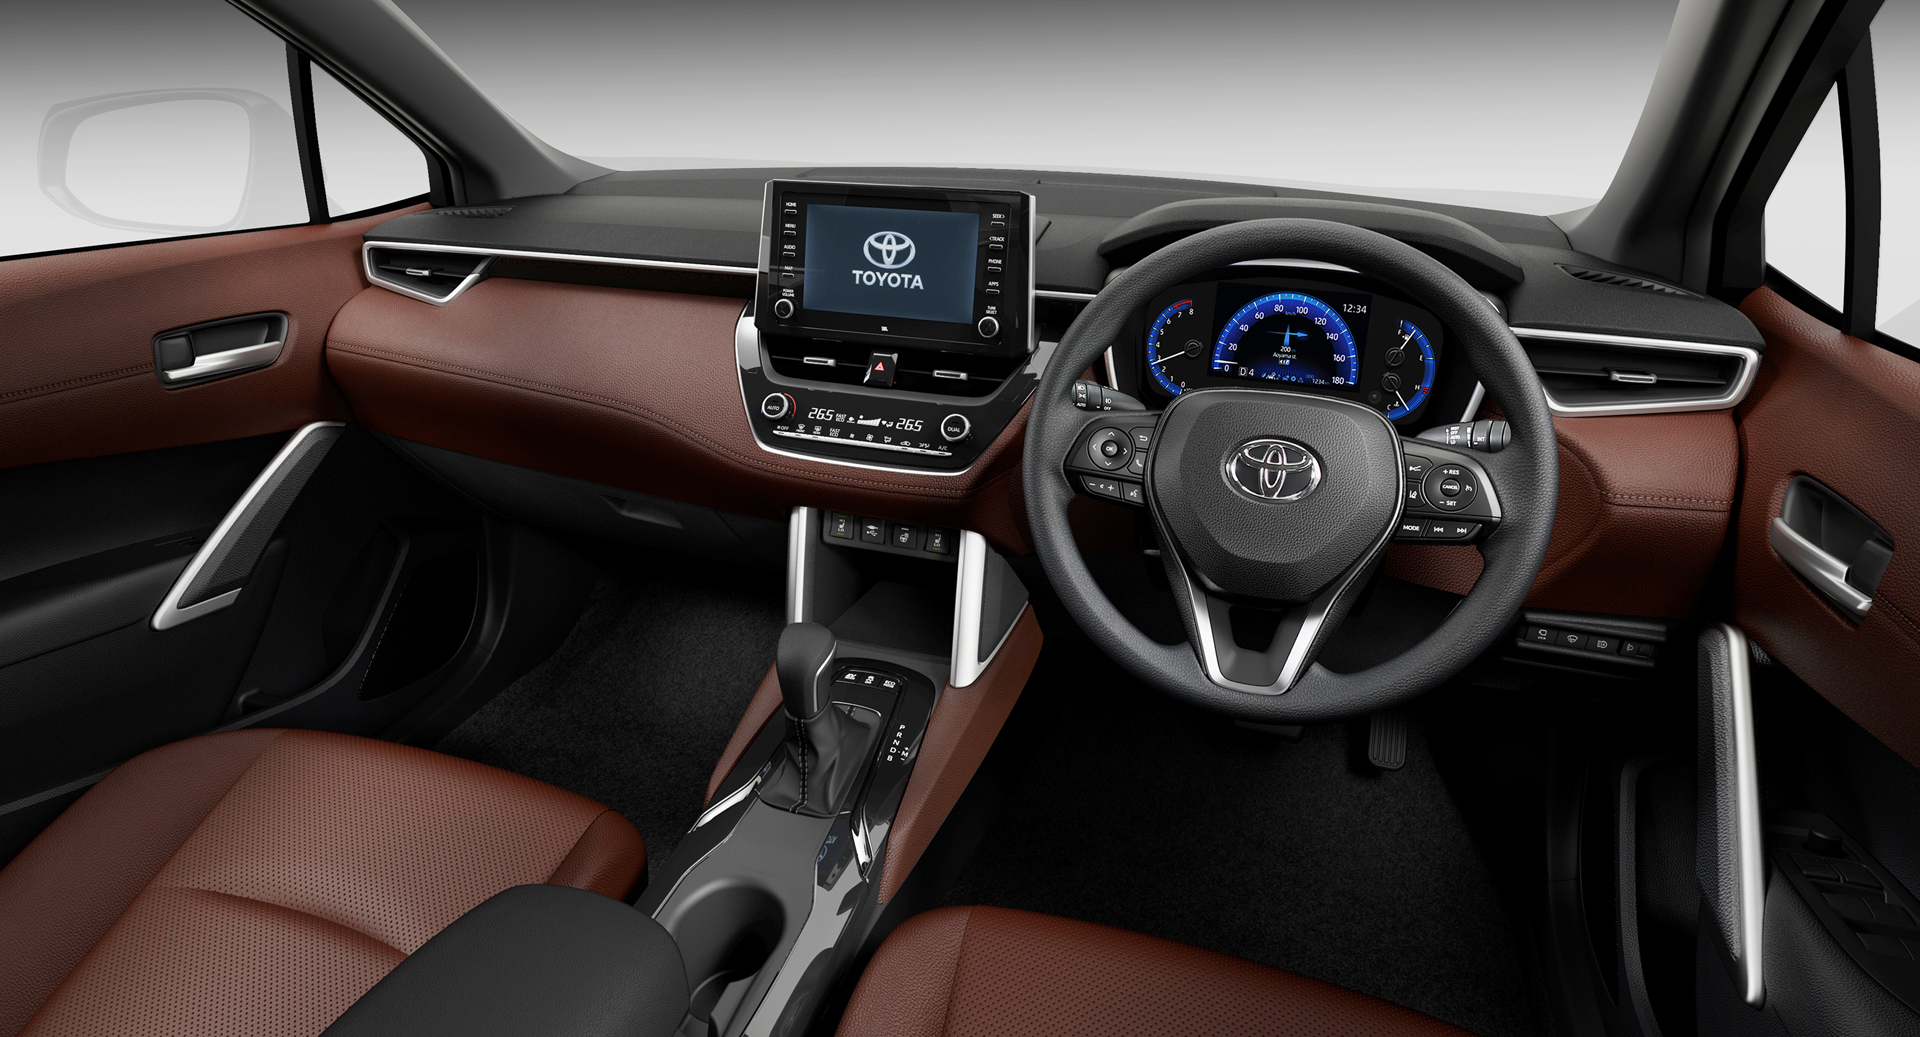 Toyota Corolla Cross Interior & Exterior Images - Toyota Corolla